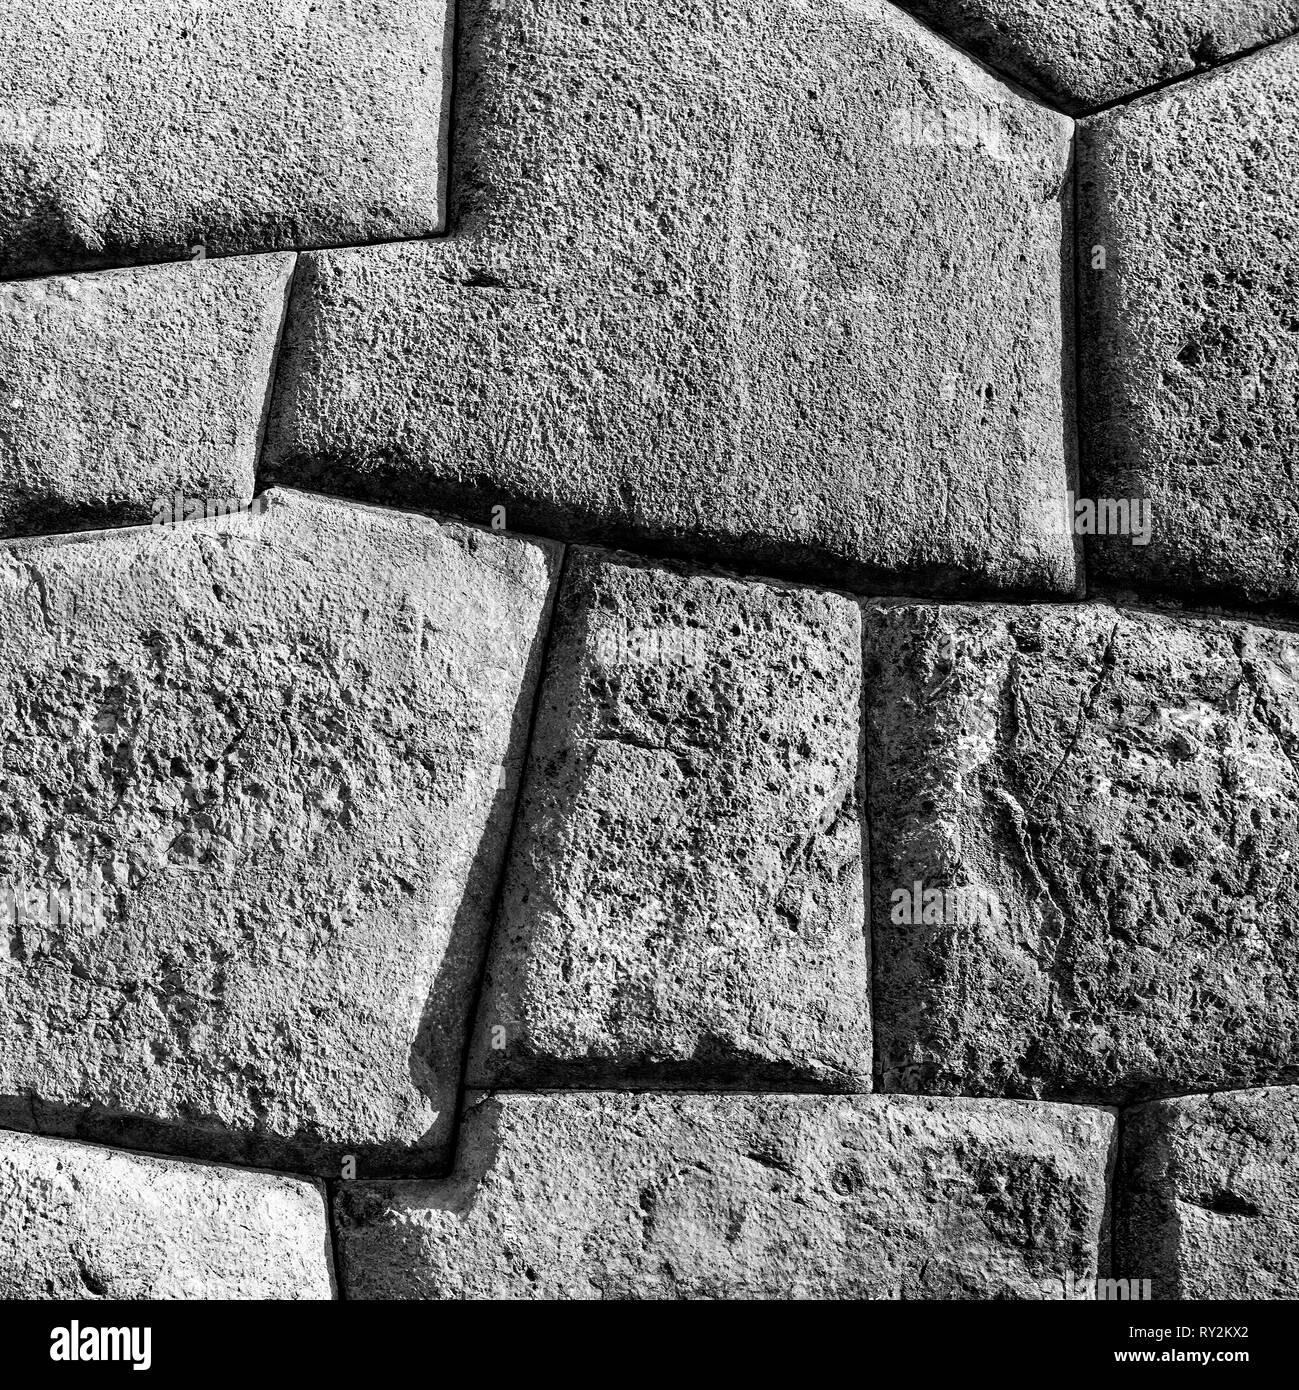 Square fotografia in bianco e nero di un muro Inca in rovina archeologica di Sacsayhuaman in Cusco, Perù. Foto Stock